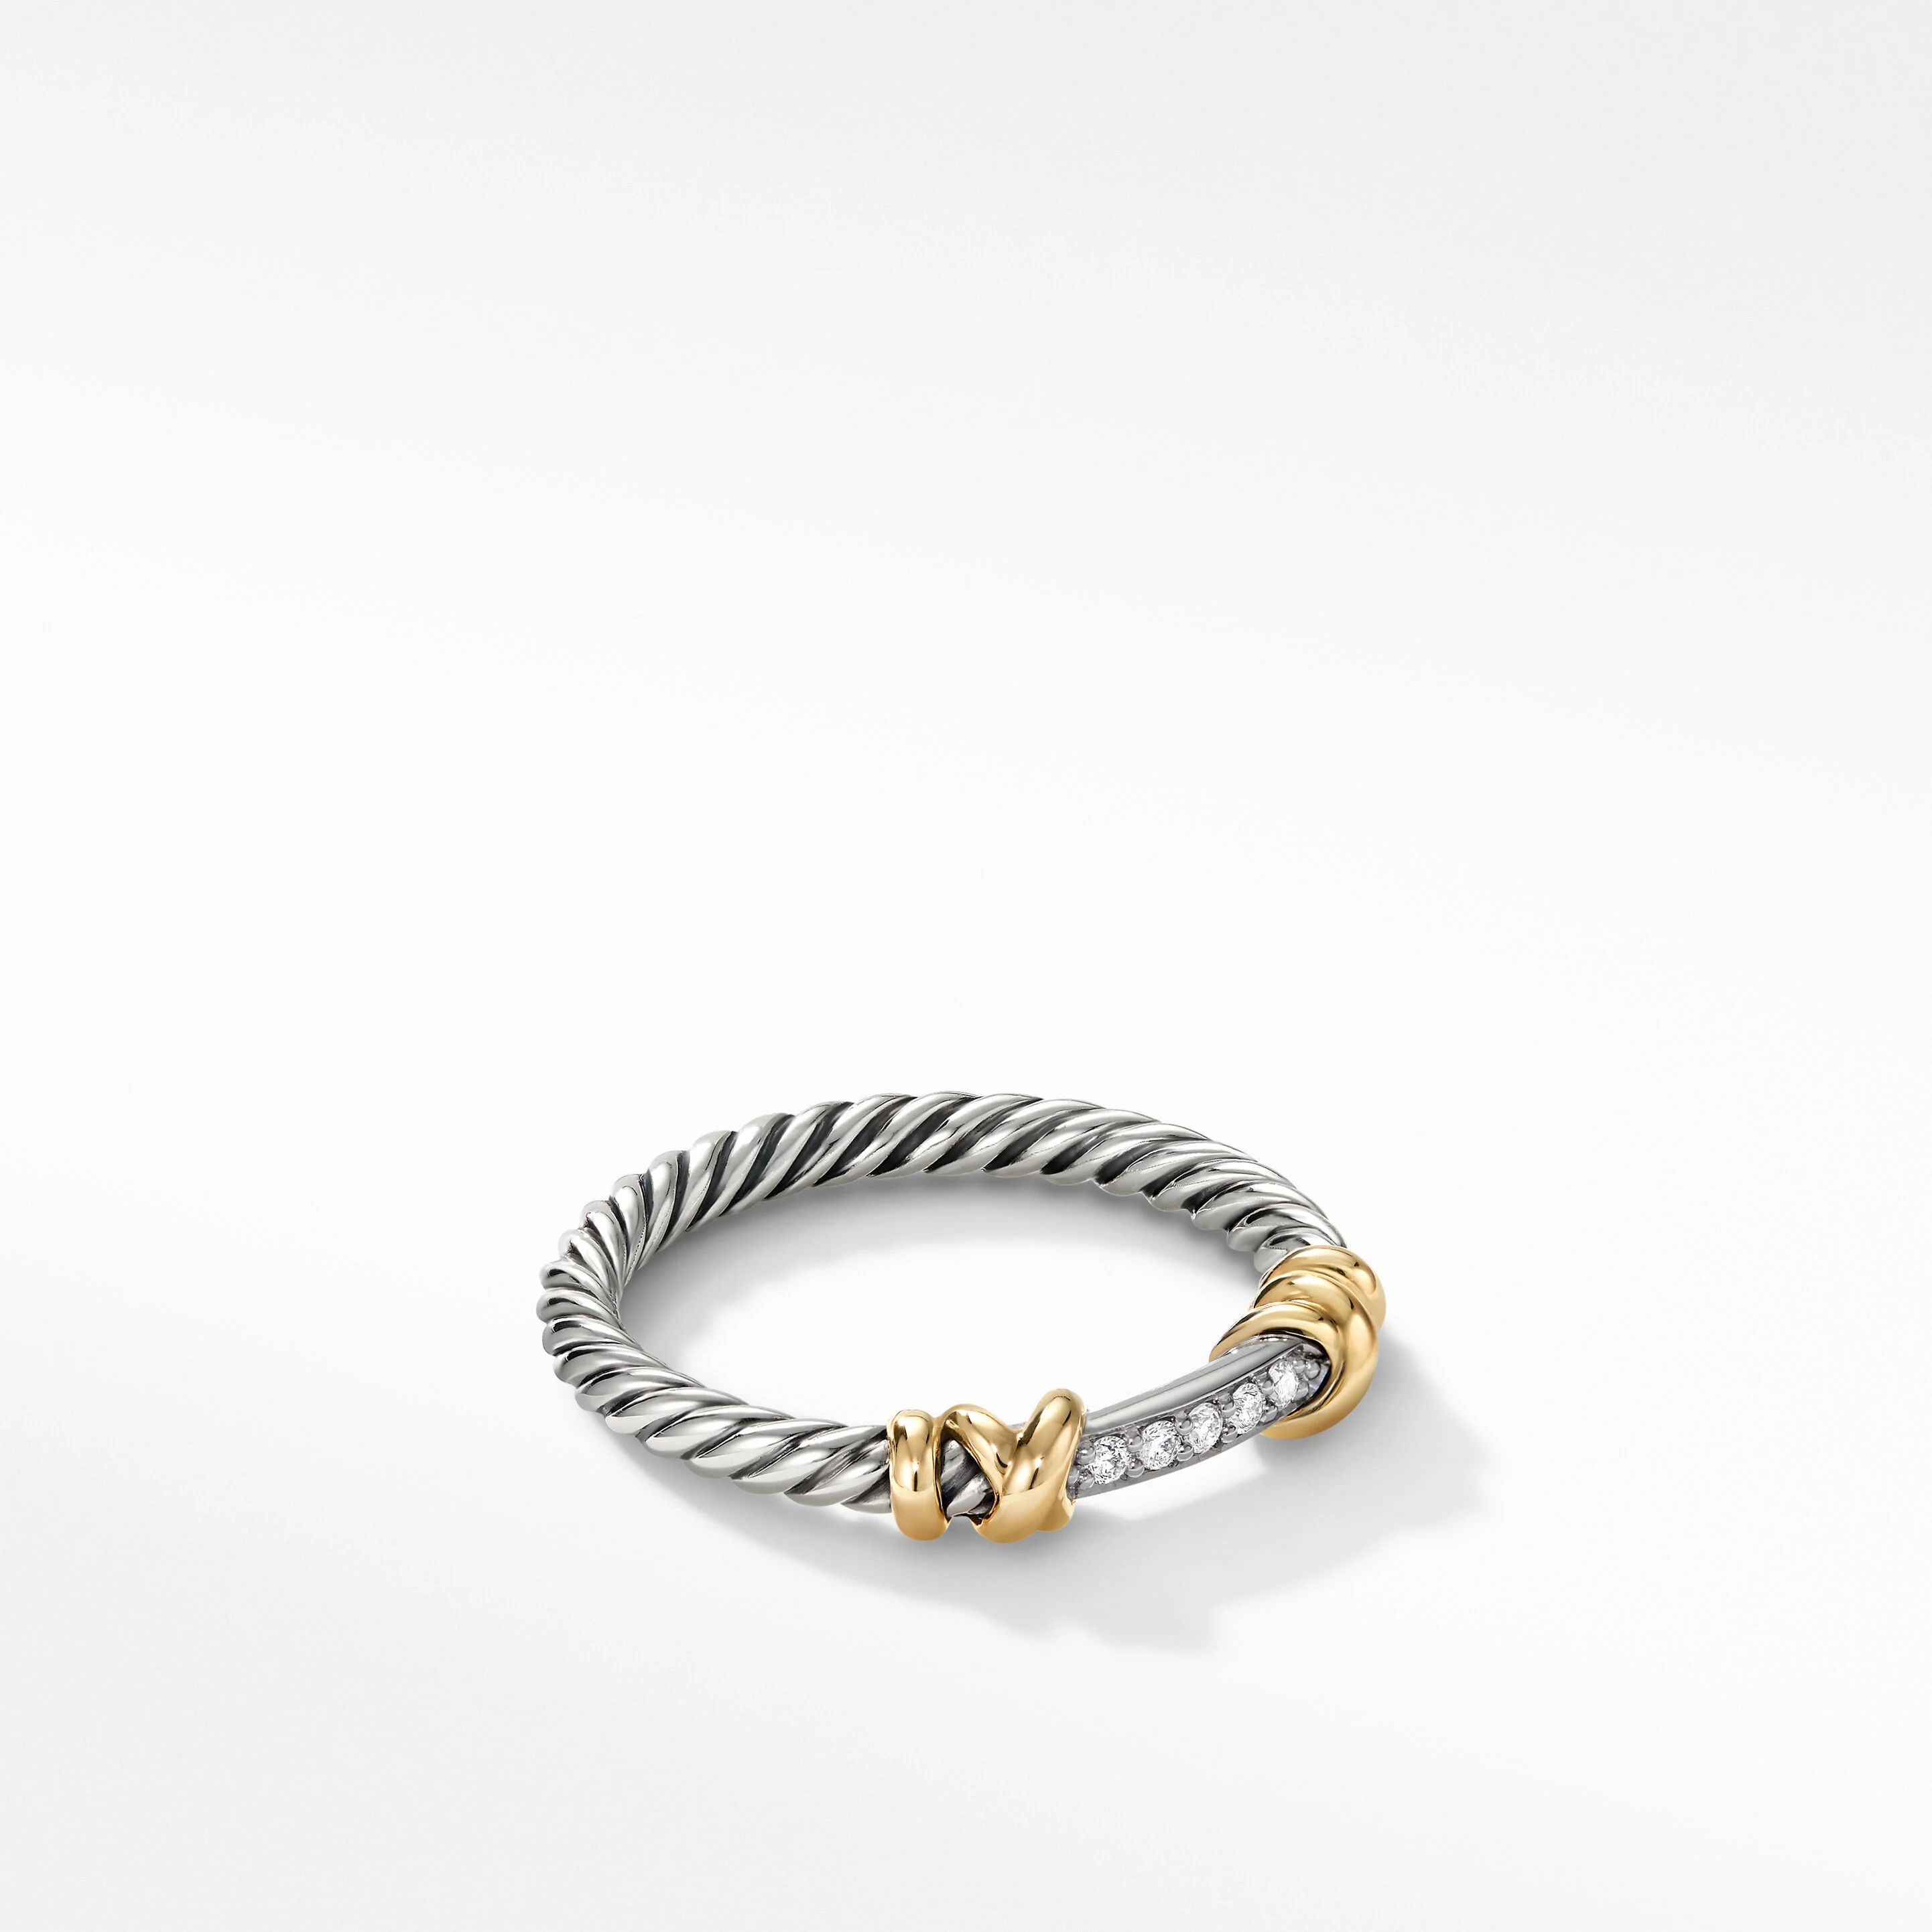 Petite Helena Wrap Band Ring with 18K Yellow Gold and Pavé Diamonds | David Yurman